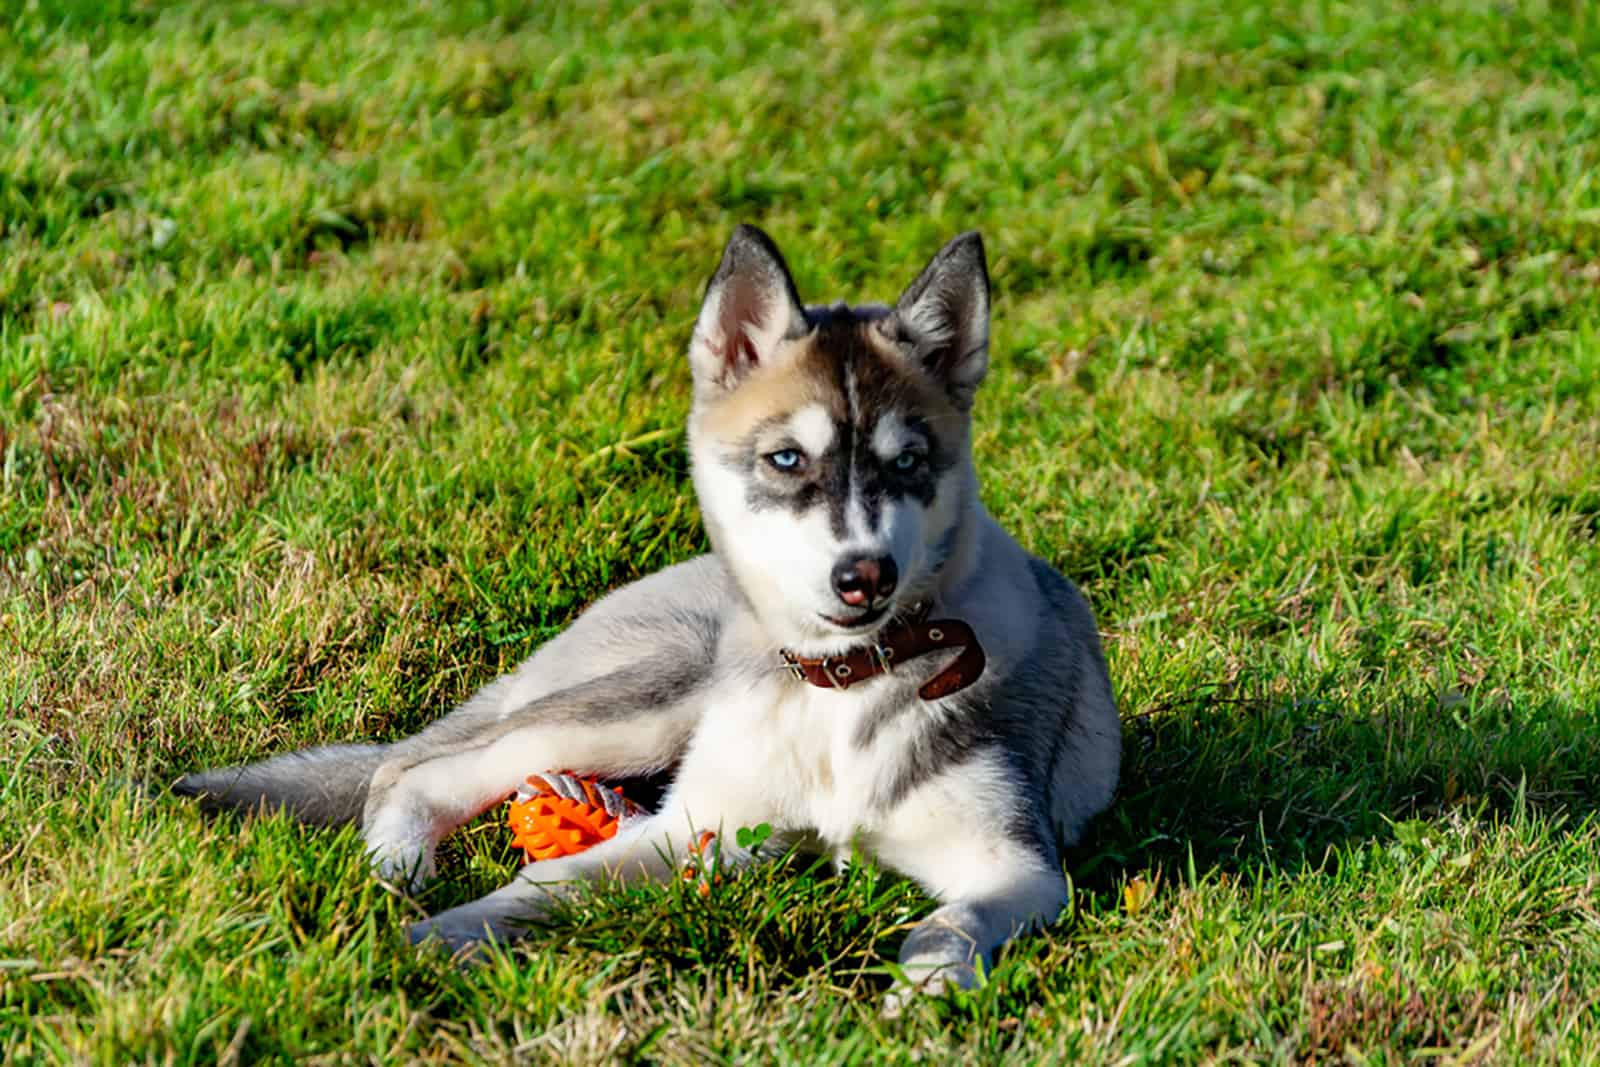 miniature husky lying on the grass